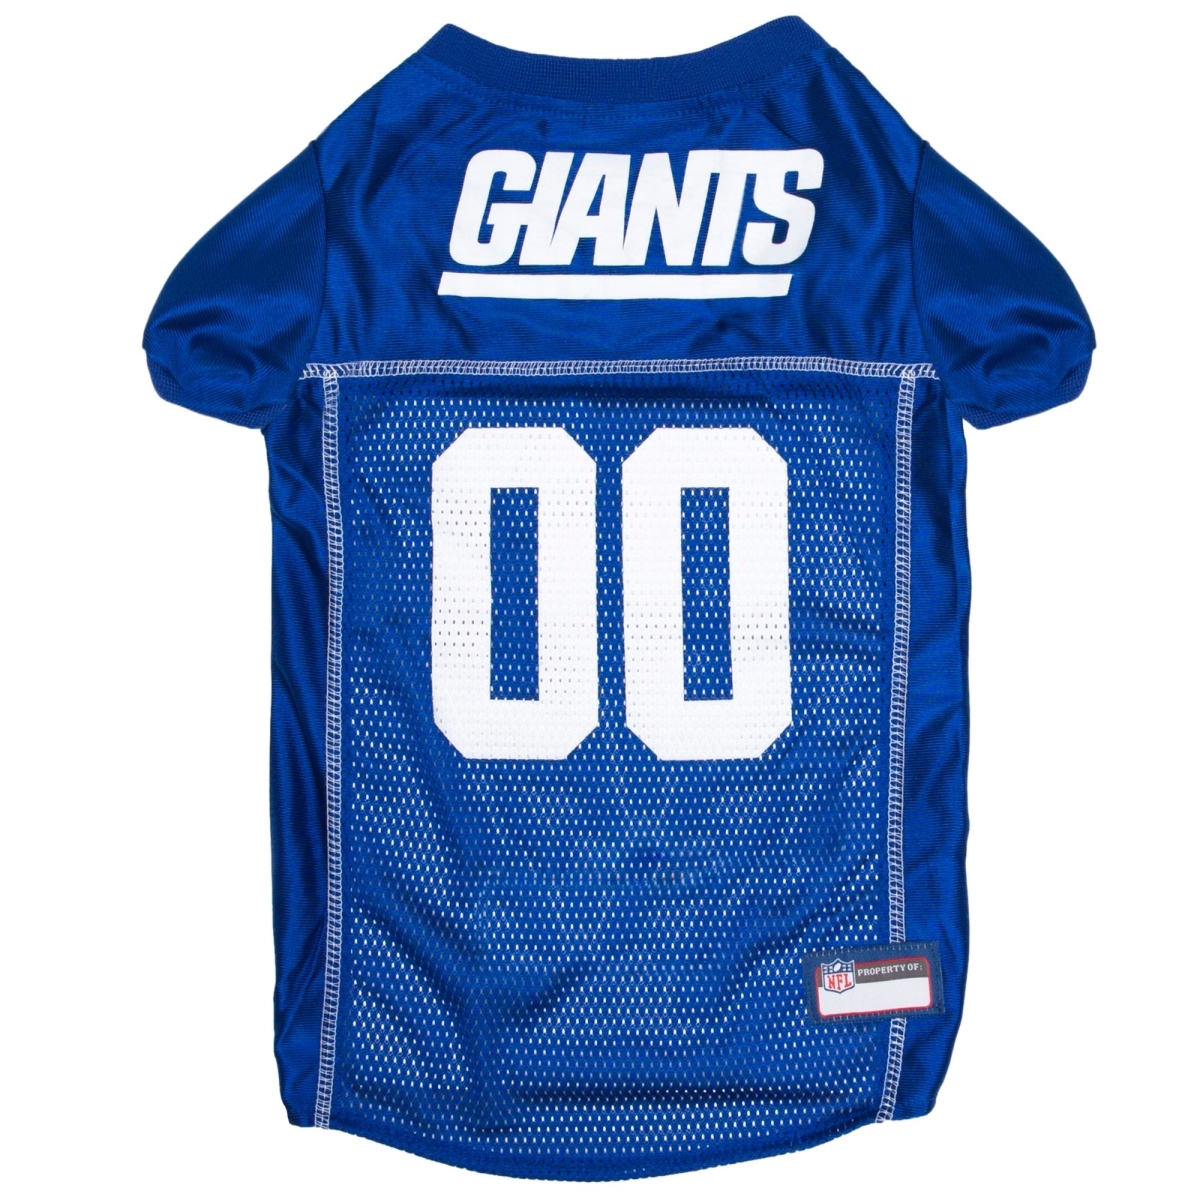 Dgnyg-4006-xs New York Giants Dog Jersey, Blue - Extra Small